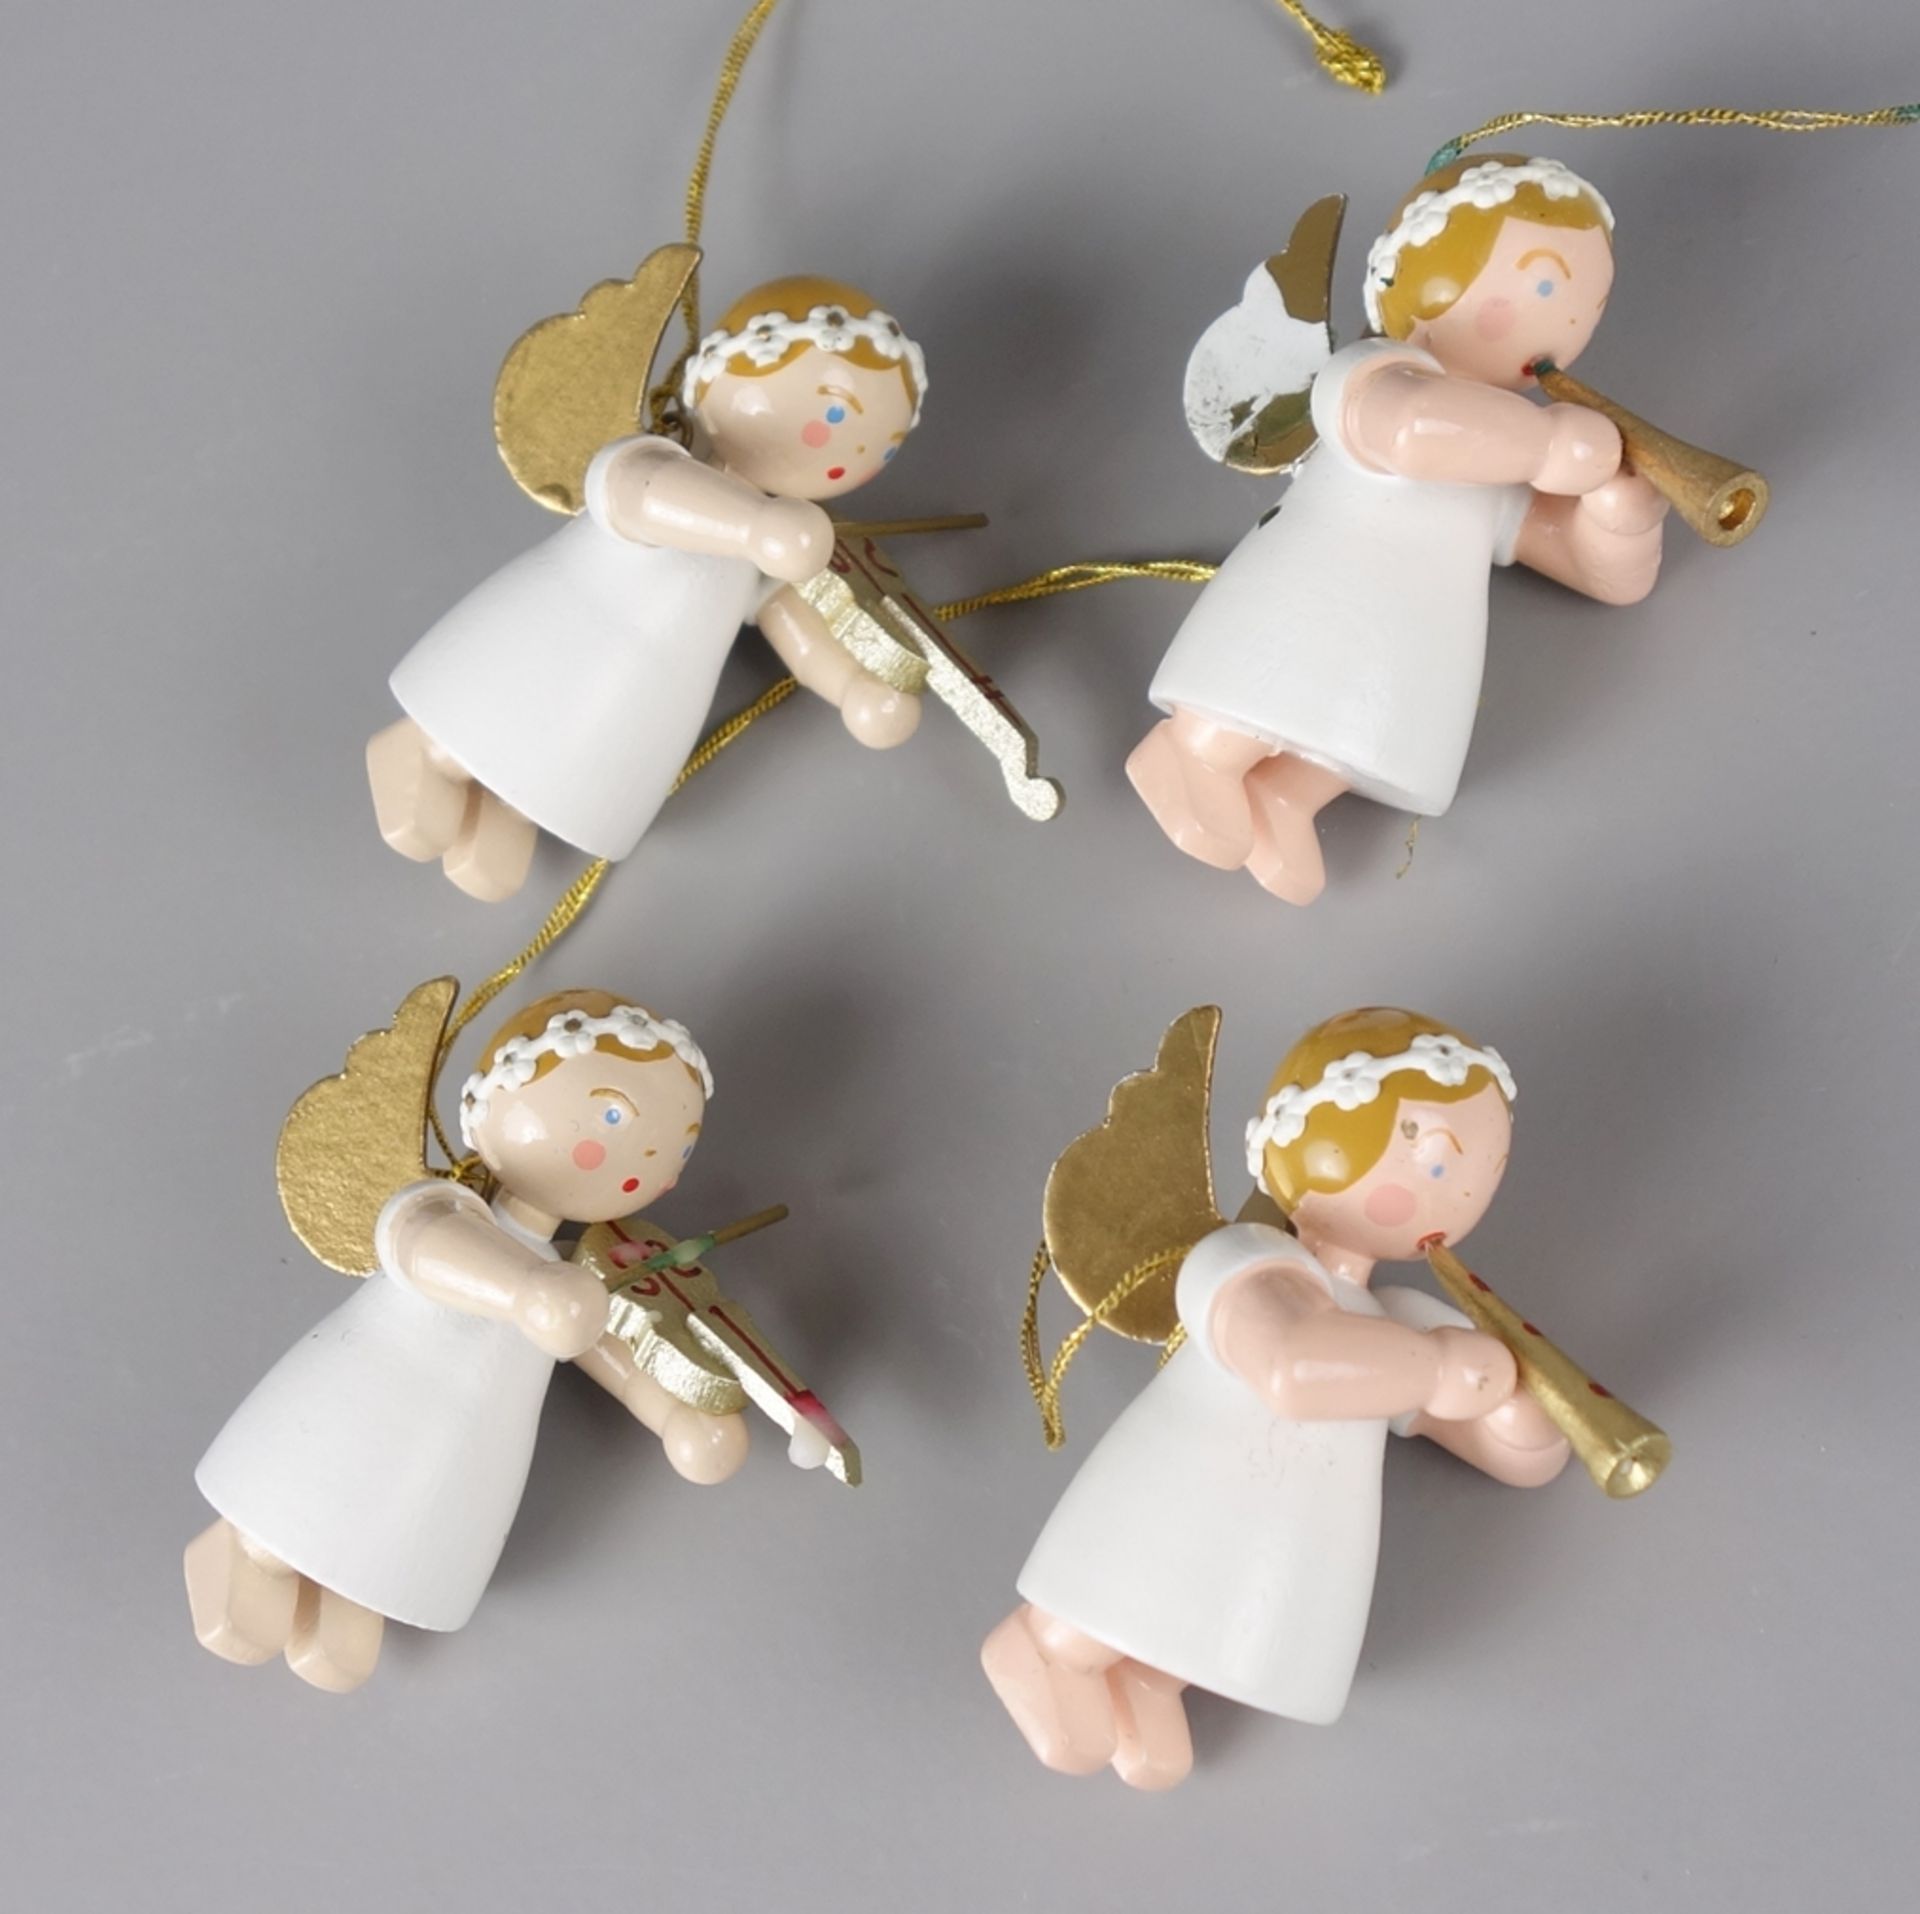 4 marguerite angel pendants, 1 angel pendant and 5 currant singers, Erzgebirge